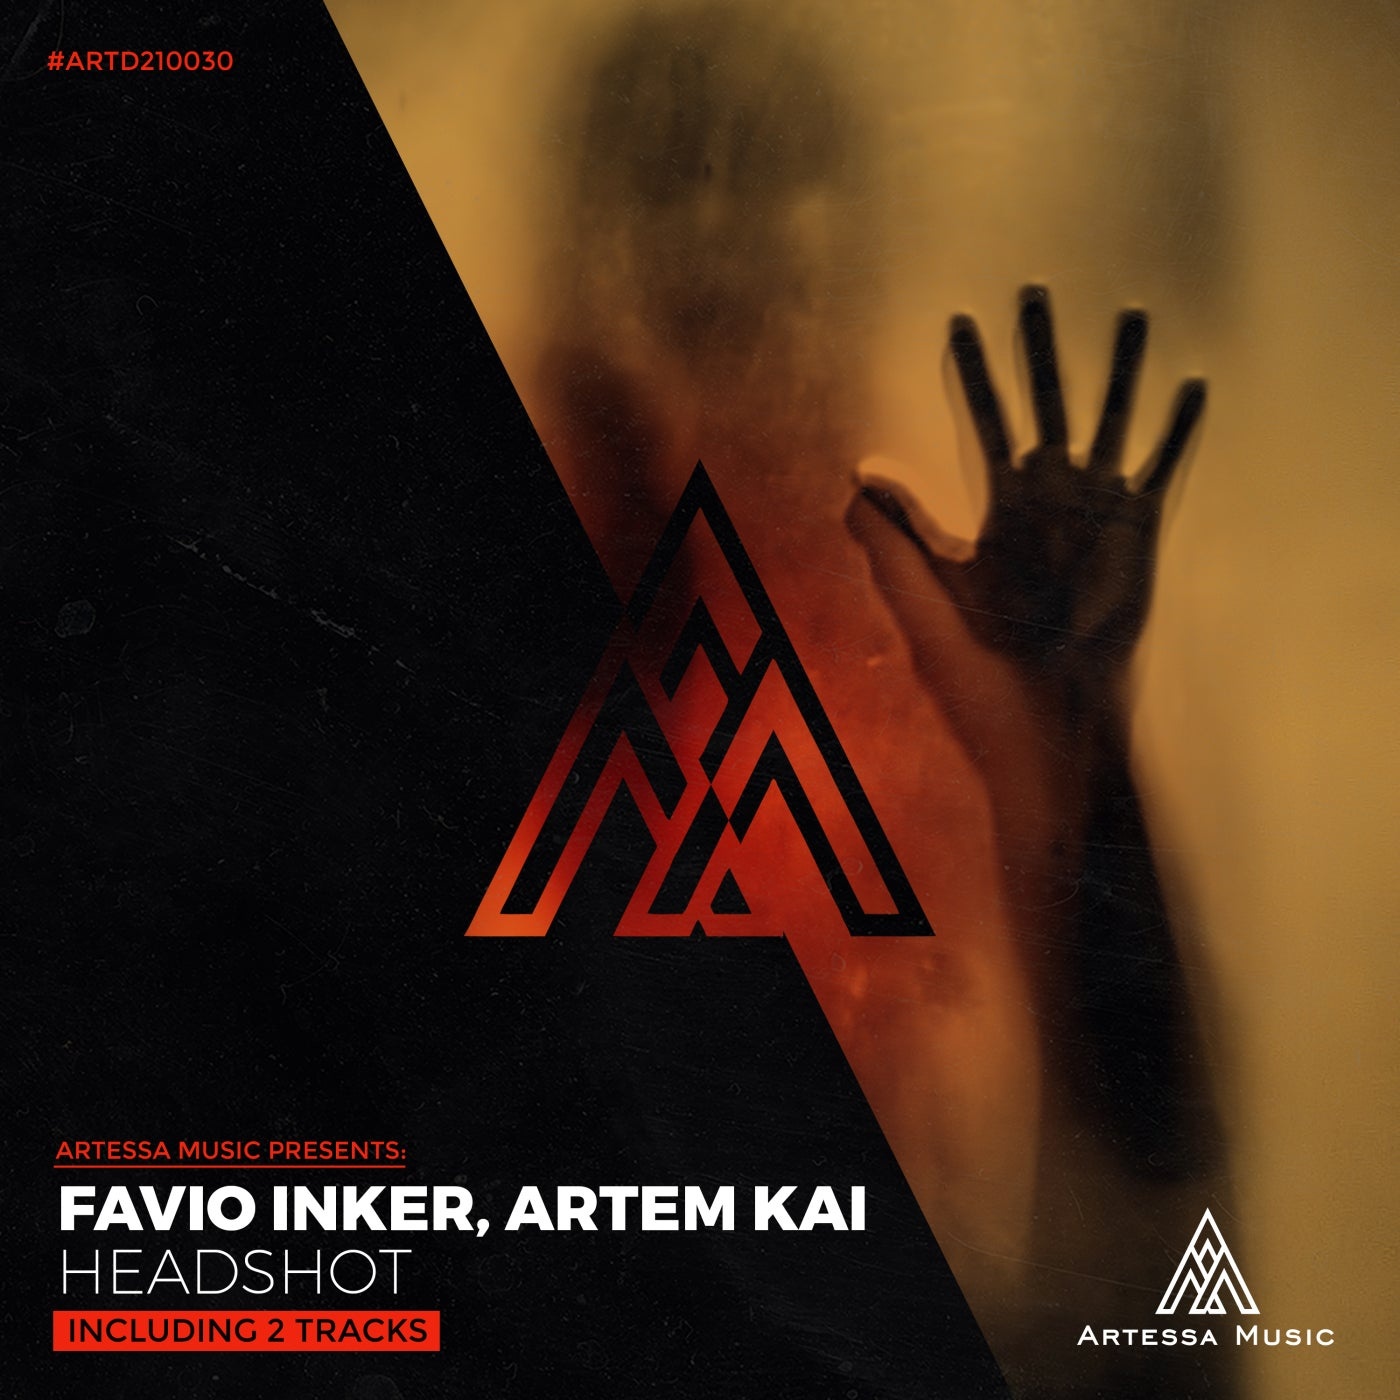 Favio Inker, Artem Kai - Headshot [ARTD210030]